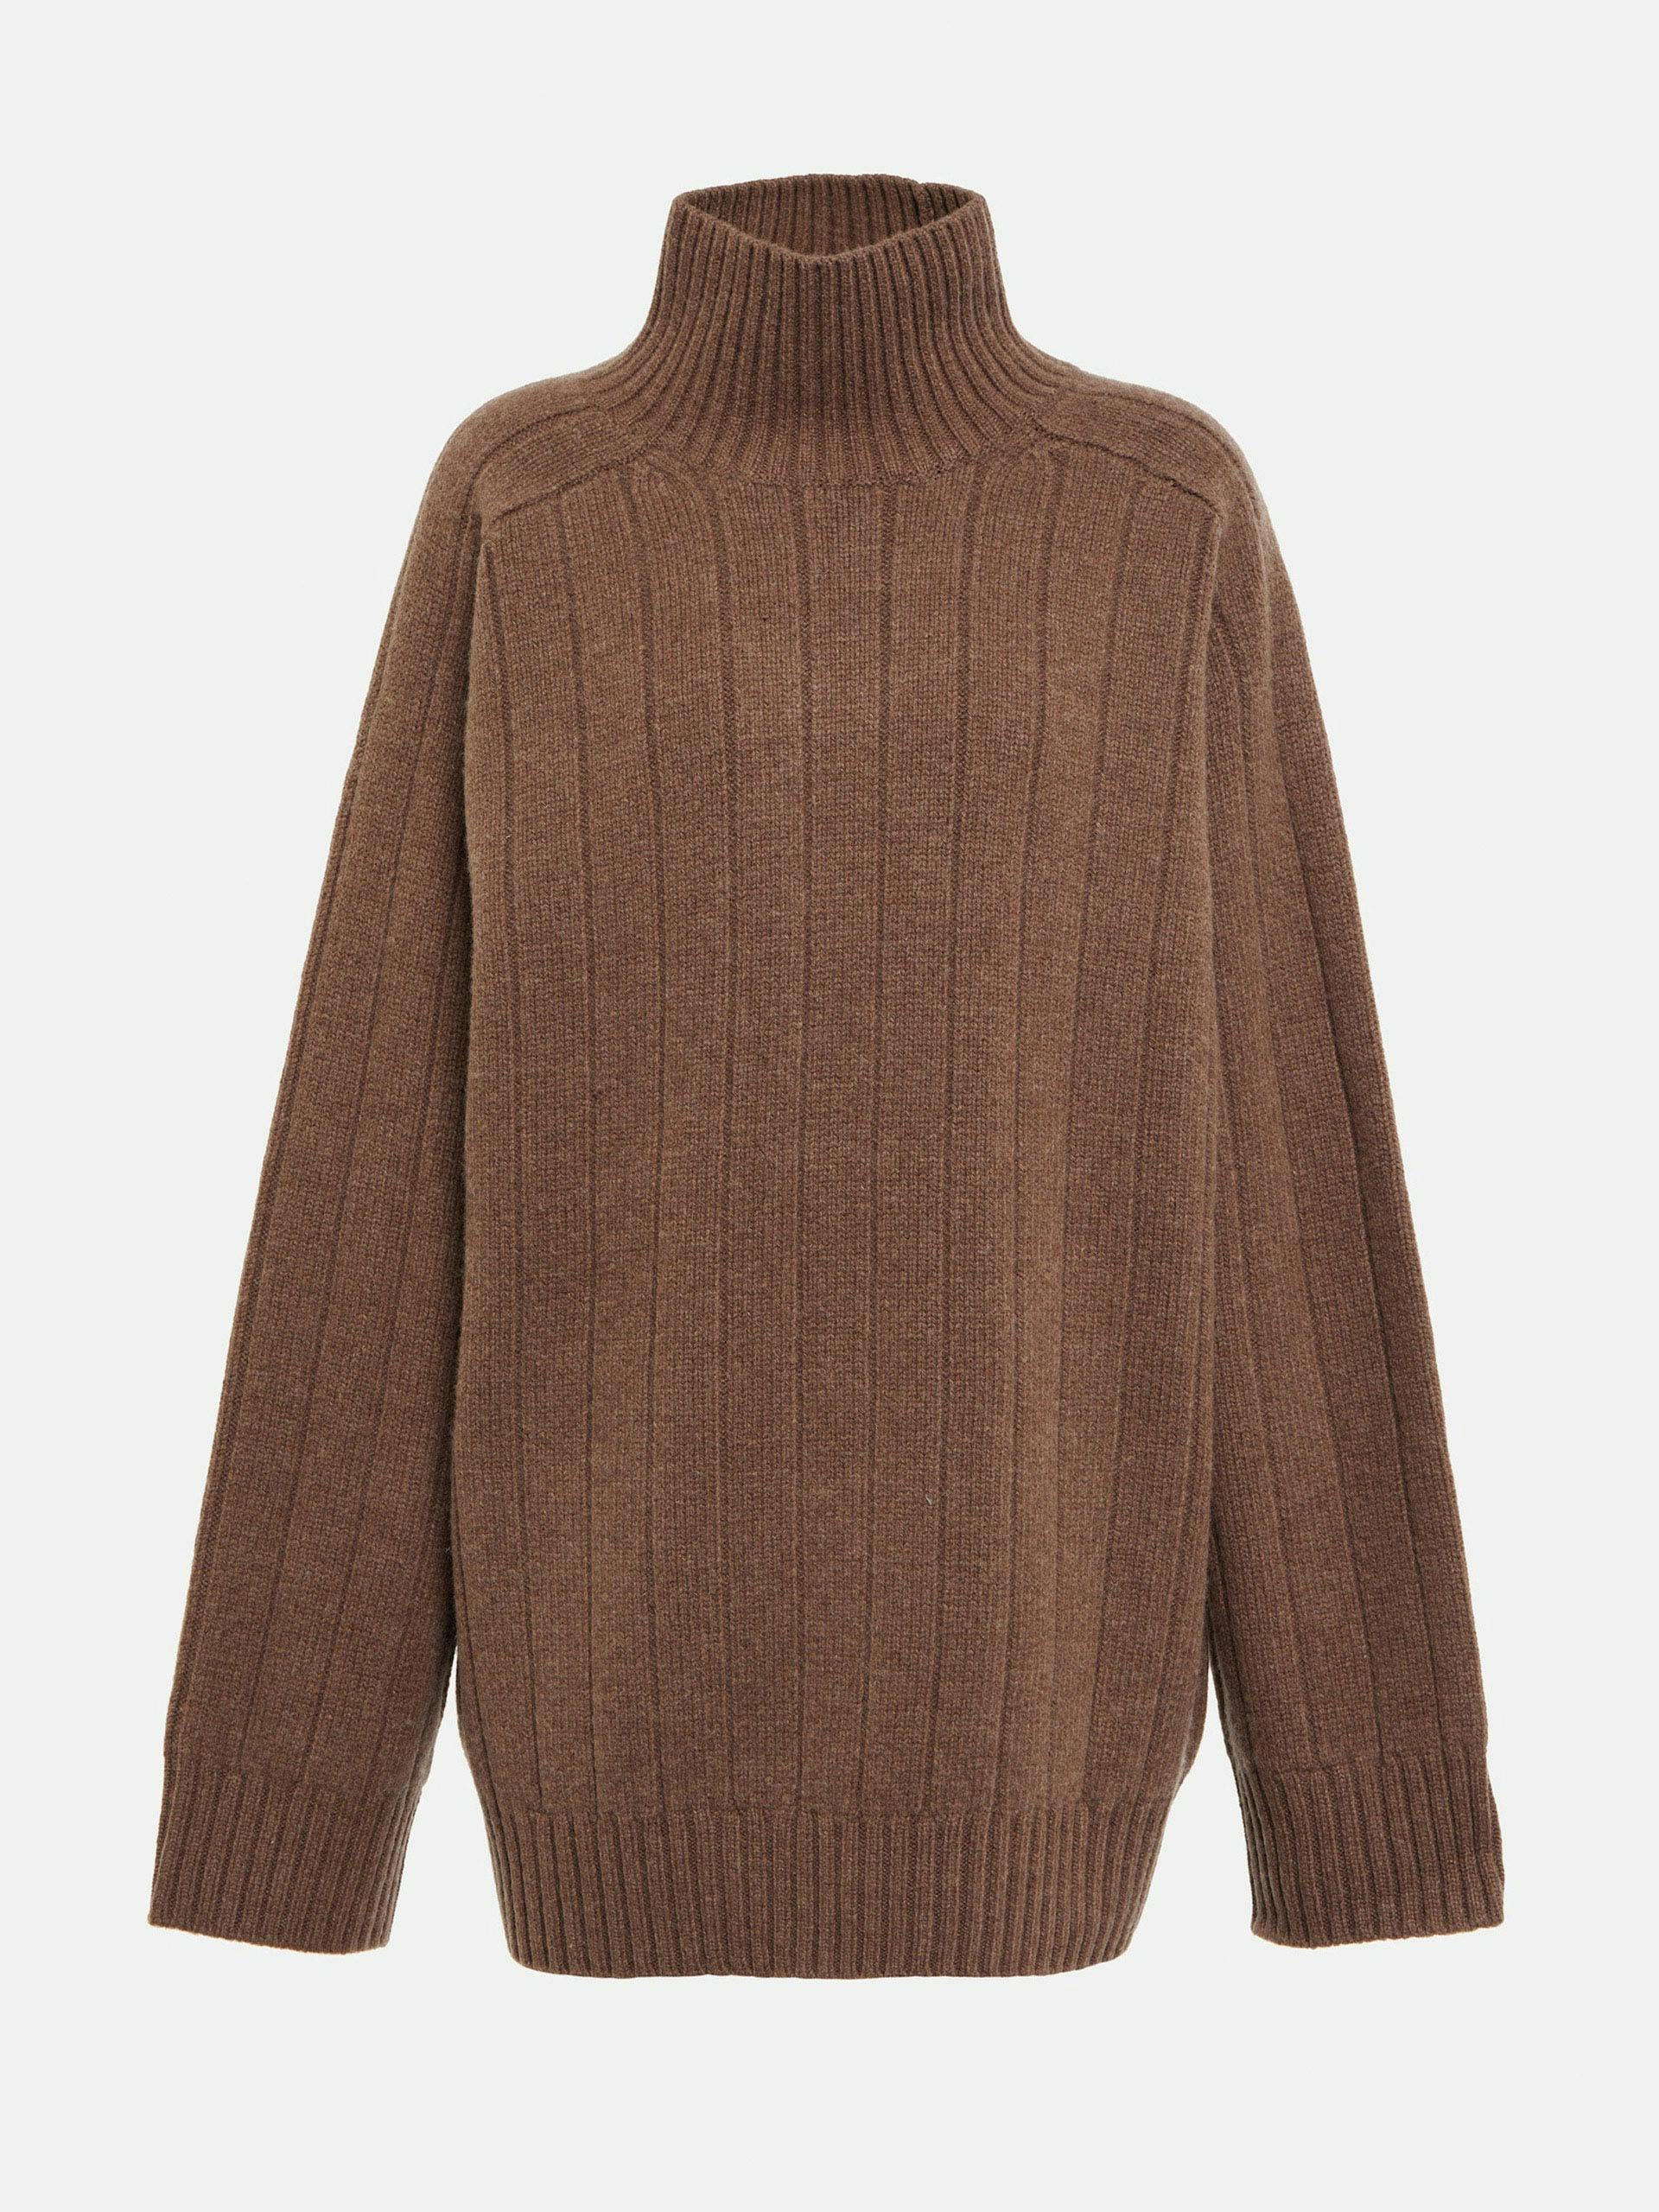 Ribbed knit wool blend turtleneck sweater